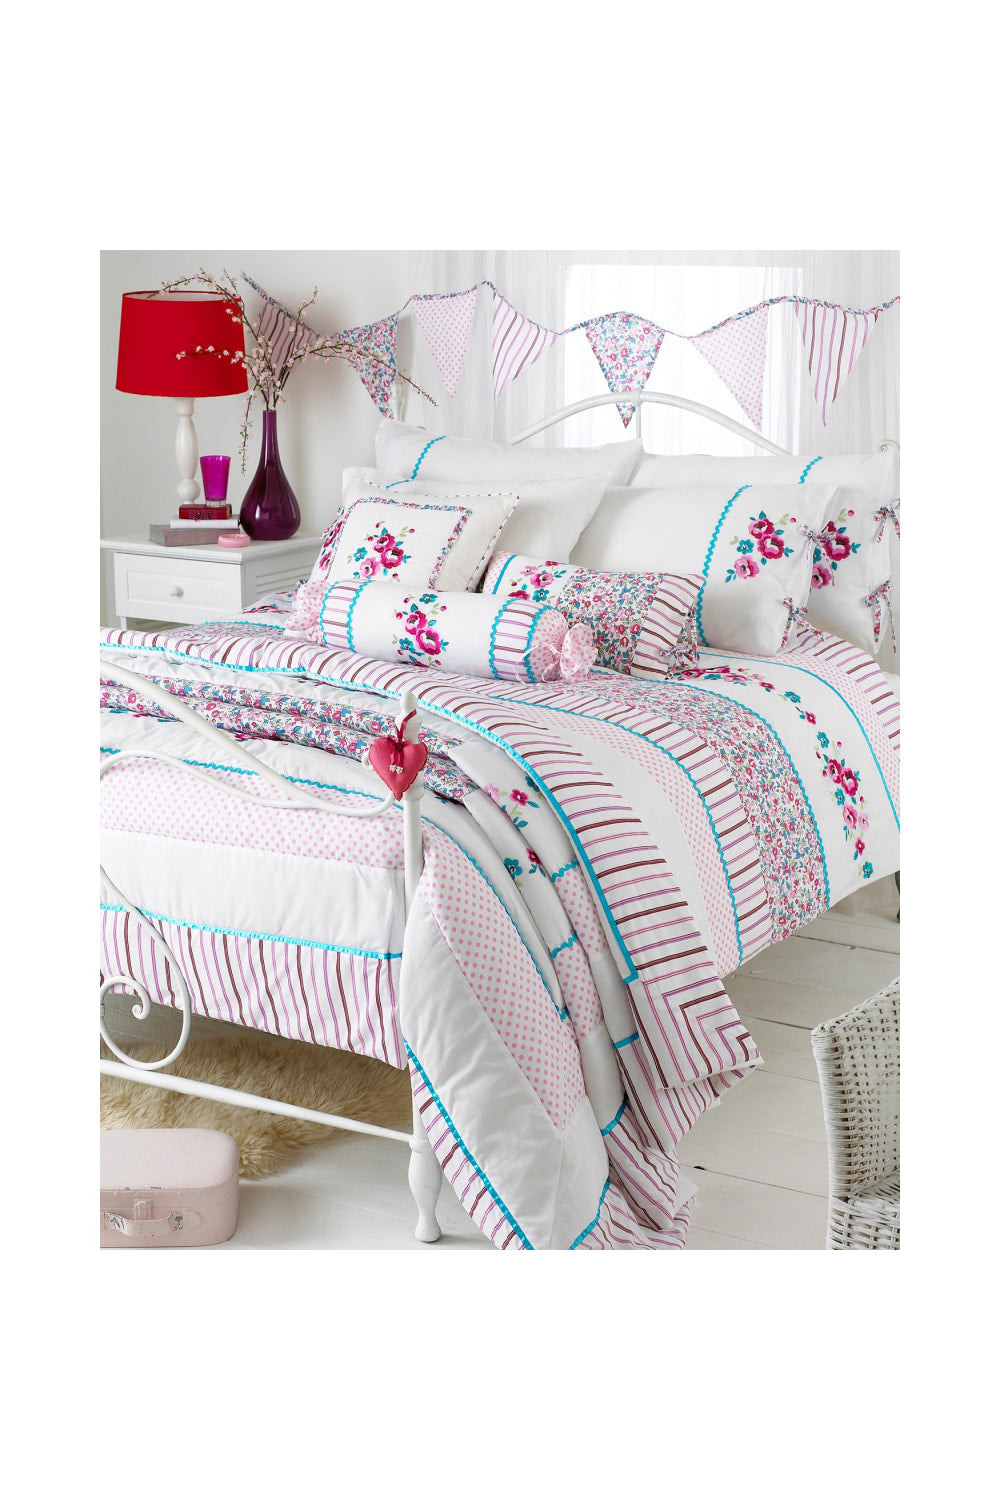 Riva Home Appleby Bedspread (Kingfisher/Pink) (94 x 102 inch) (UK - 240x260cm)